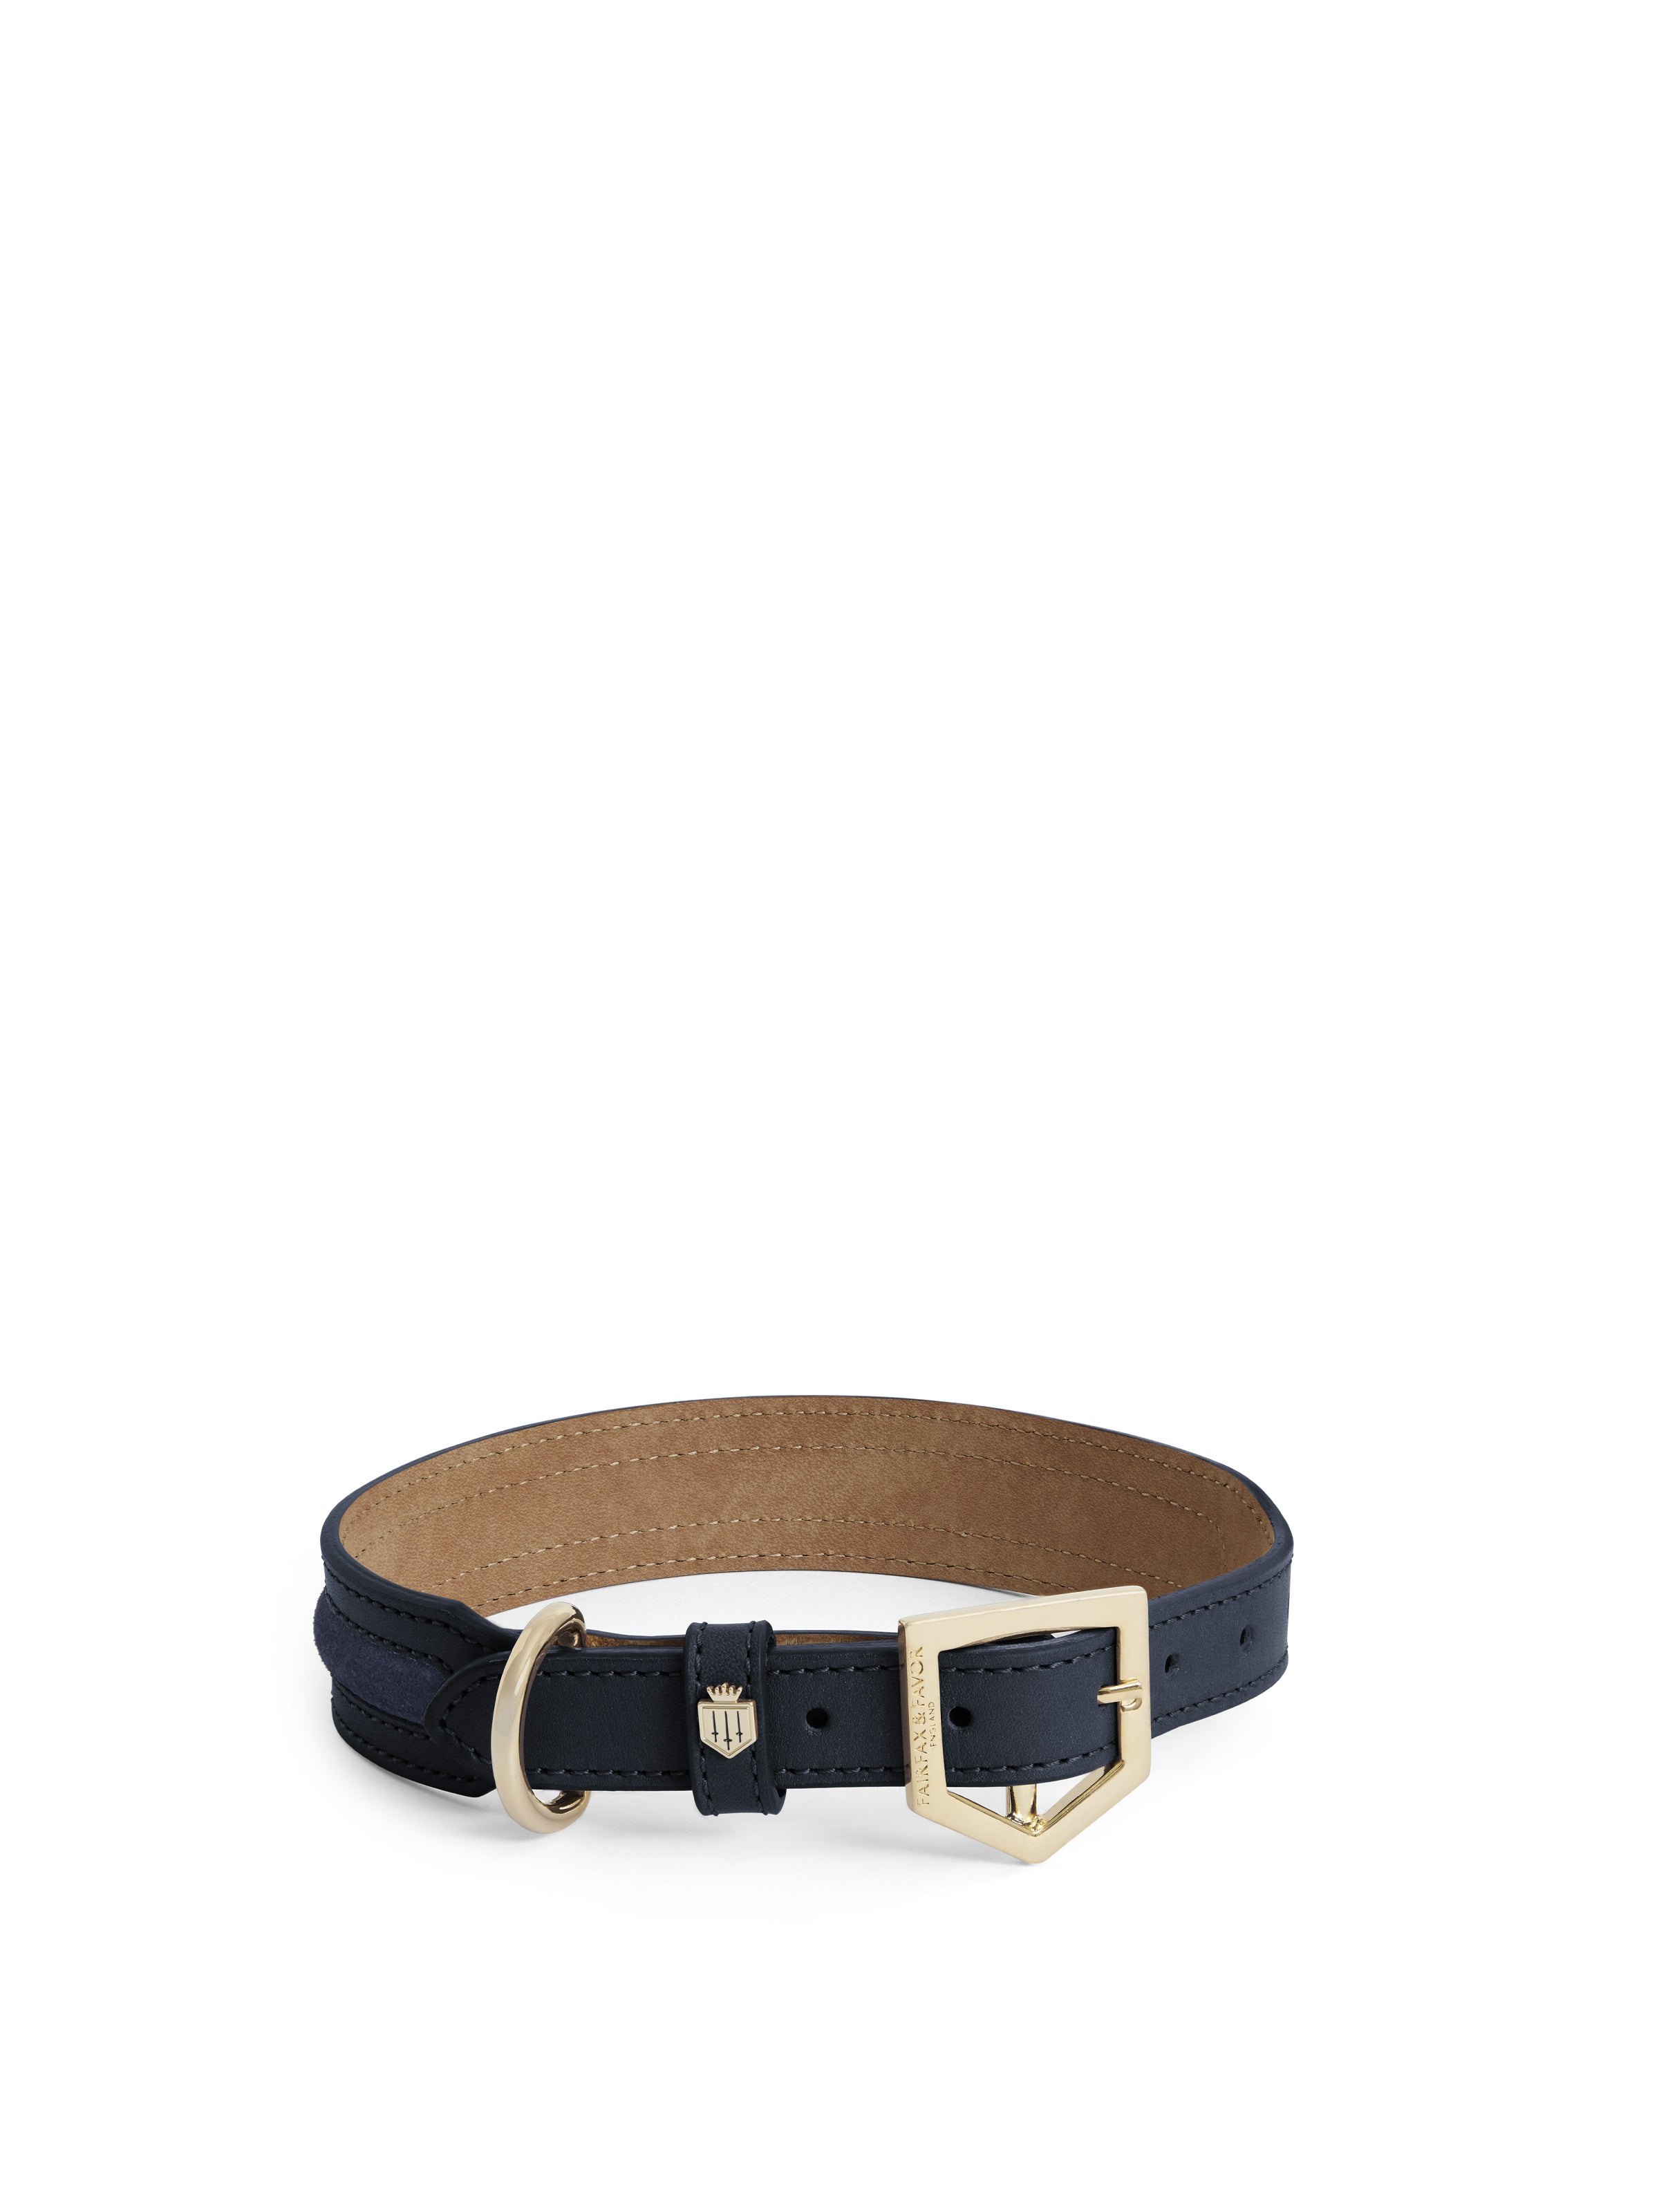 Hampton - Dog Collar - Navy & Ink Leather | Fairfax & Favor